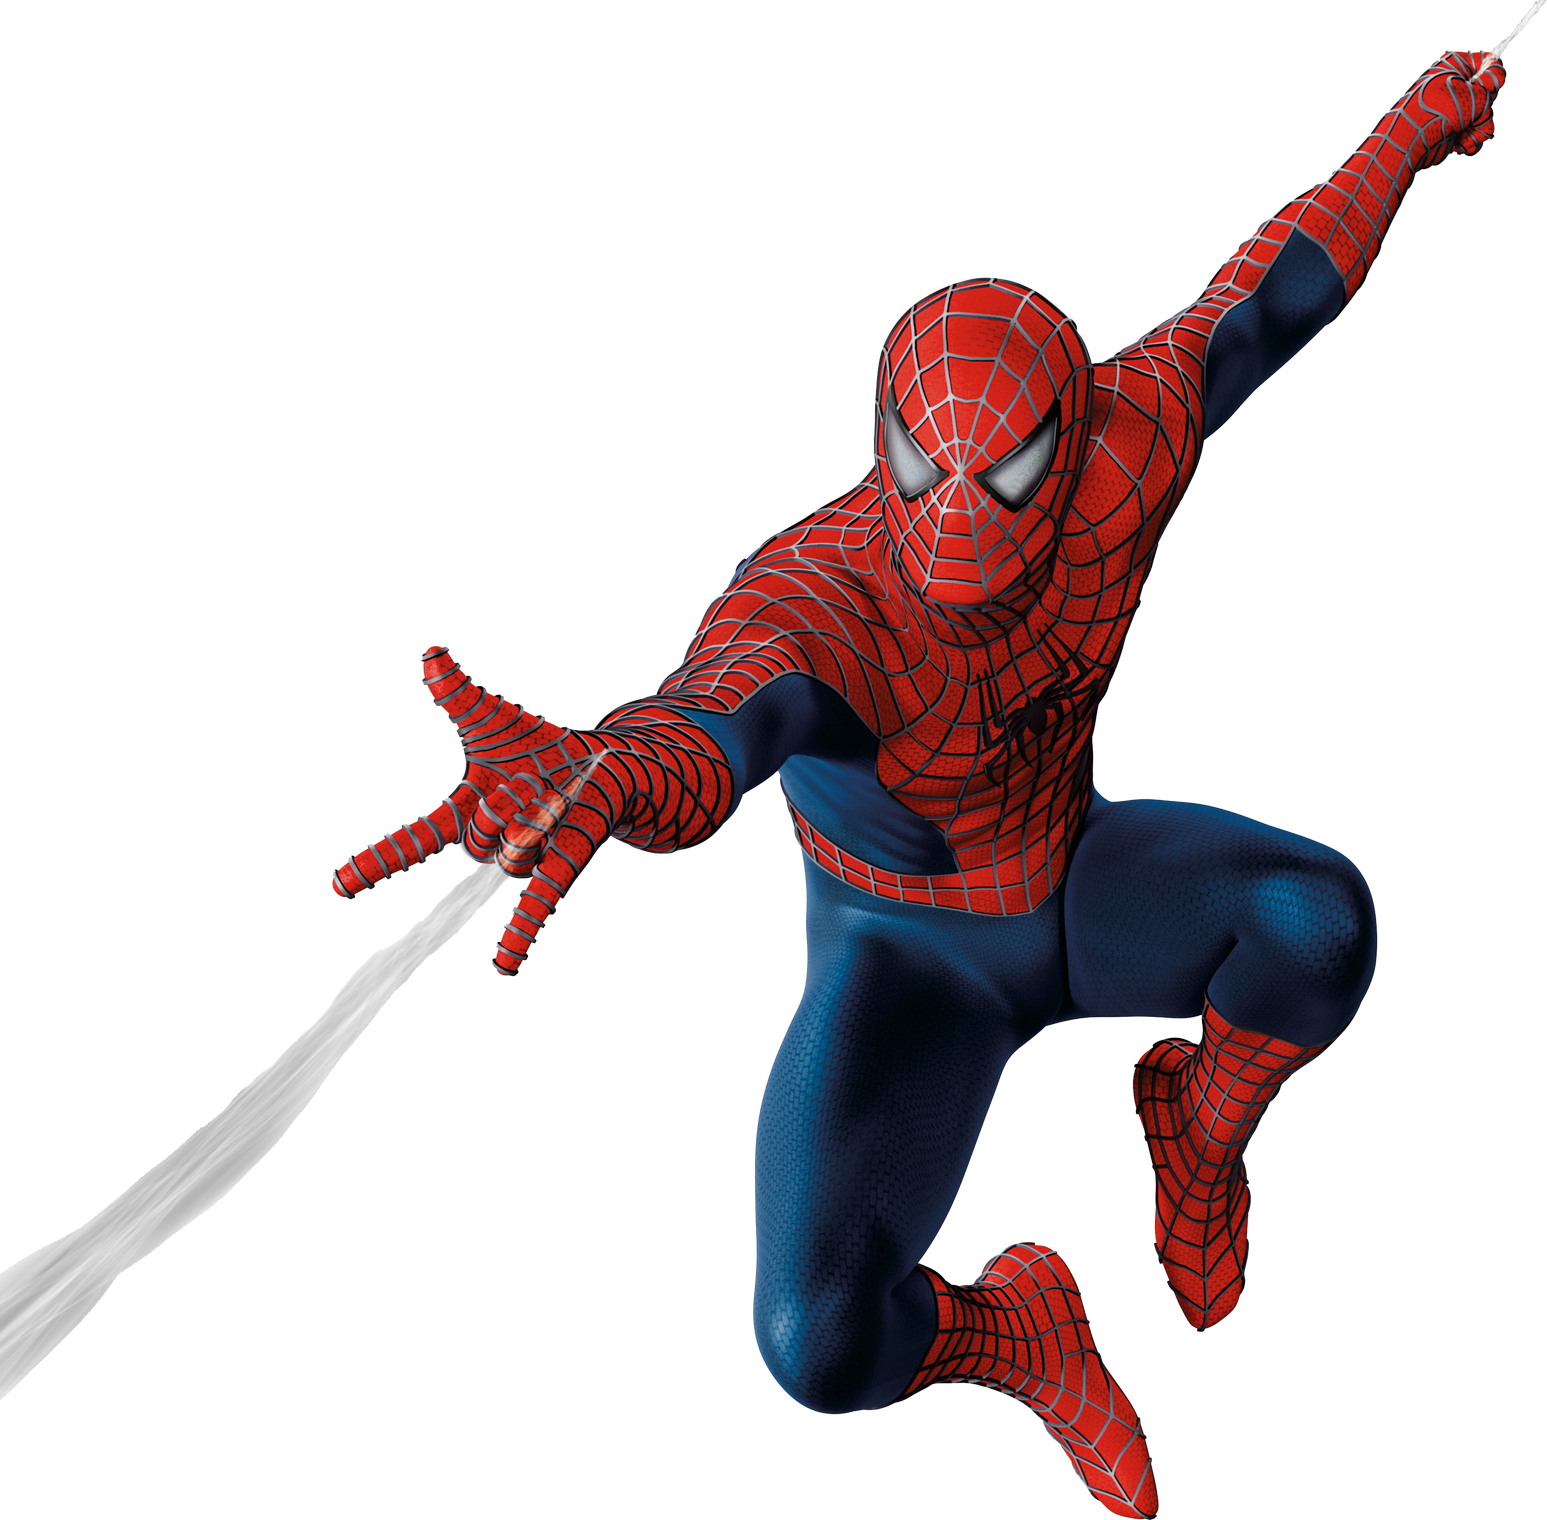 Tobey Maguire's Spider-Man